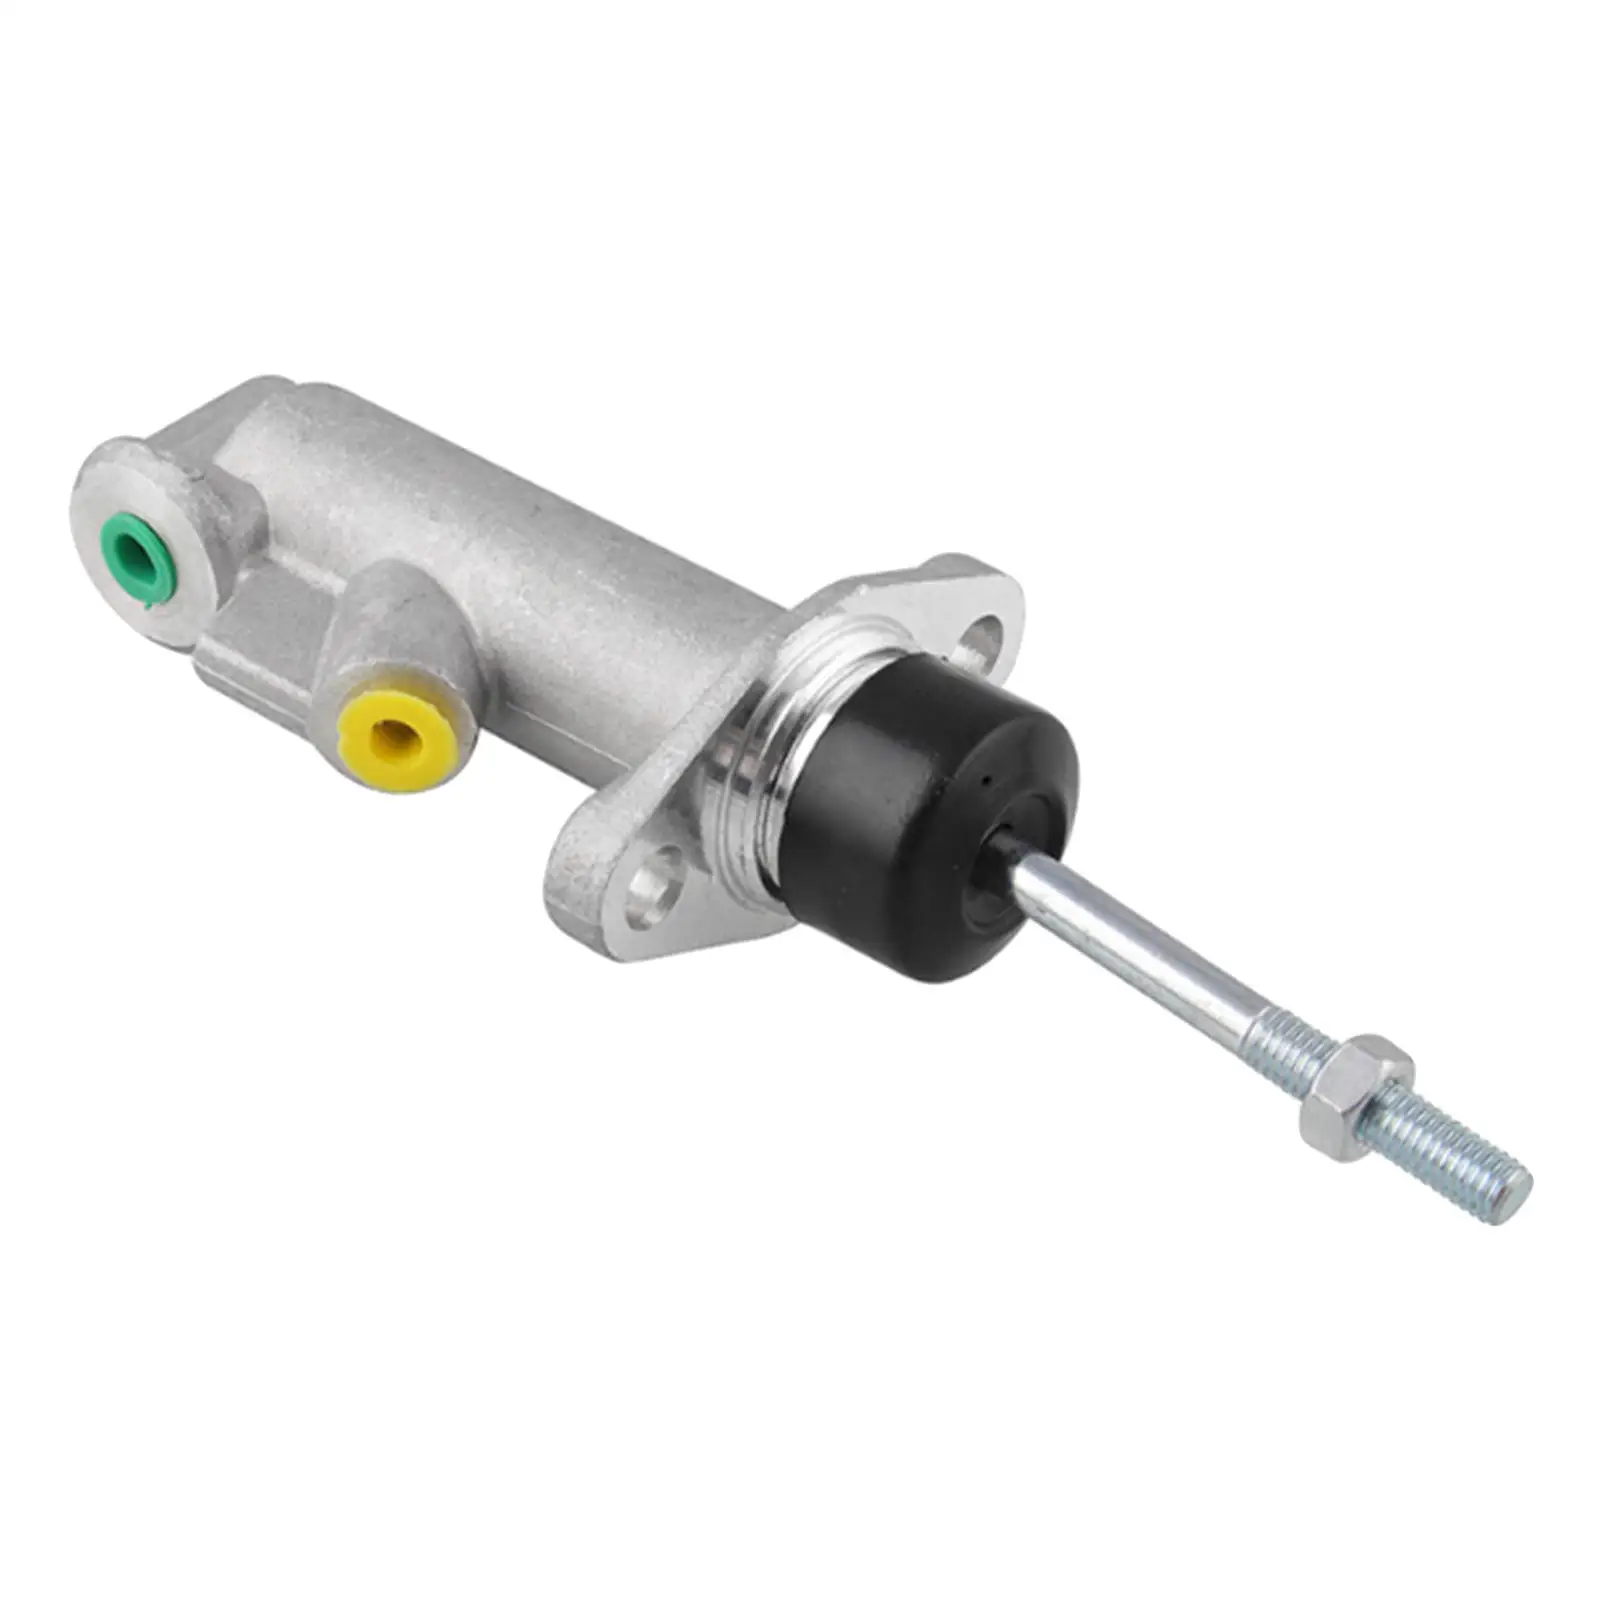 Brake Clutch Master Cylinder Aluminum Alloy ACC Replace Hydraulic Handbrake Pump Parts for Hydraulic Hydro Handbrake